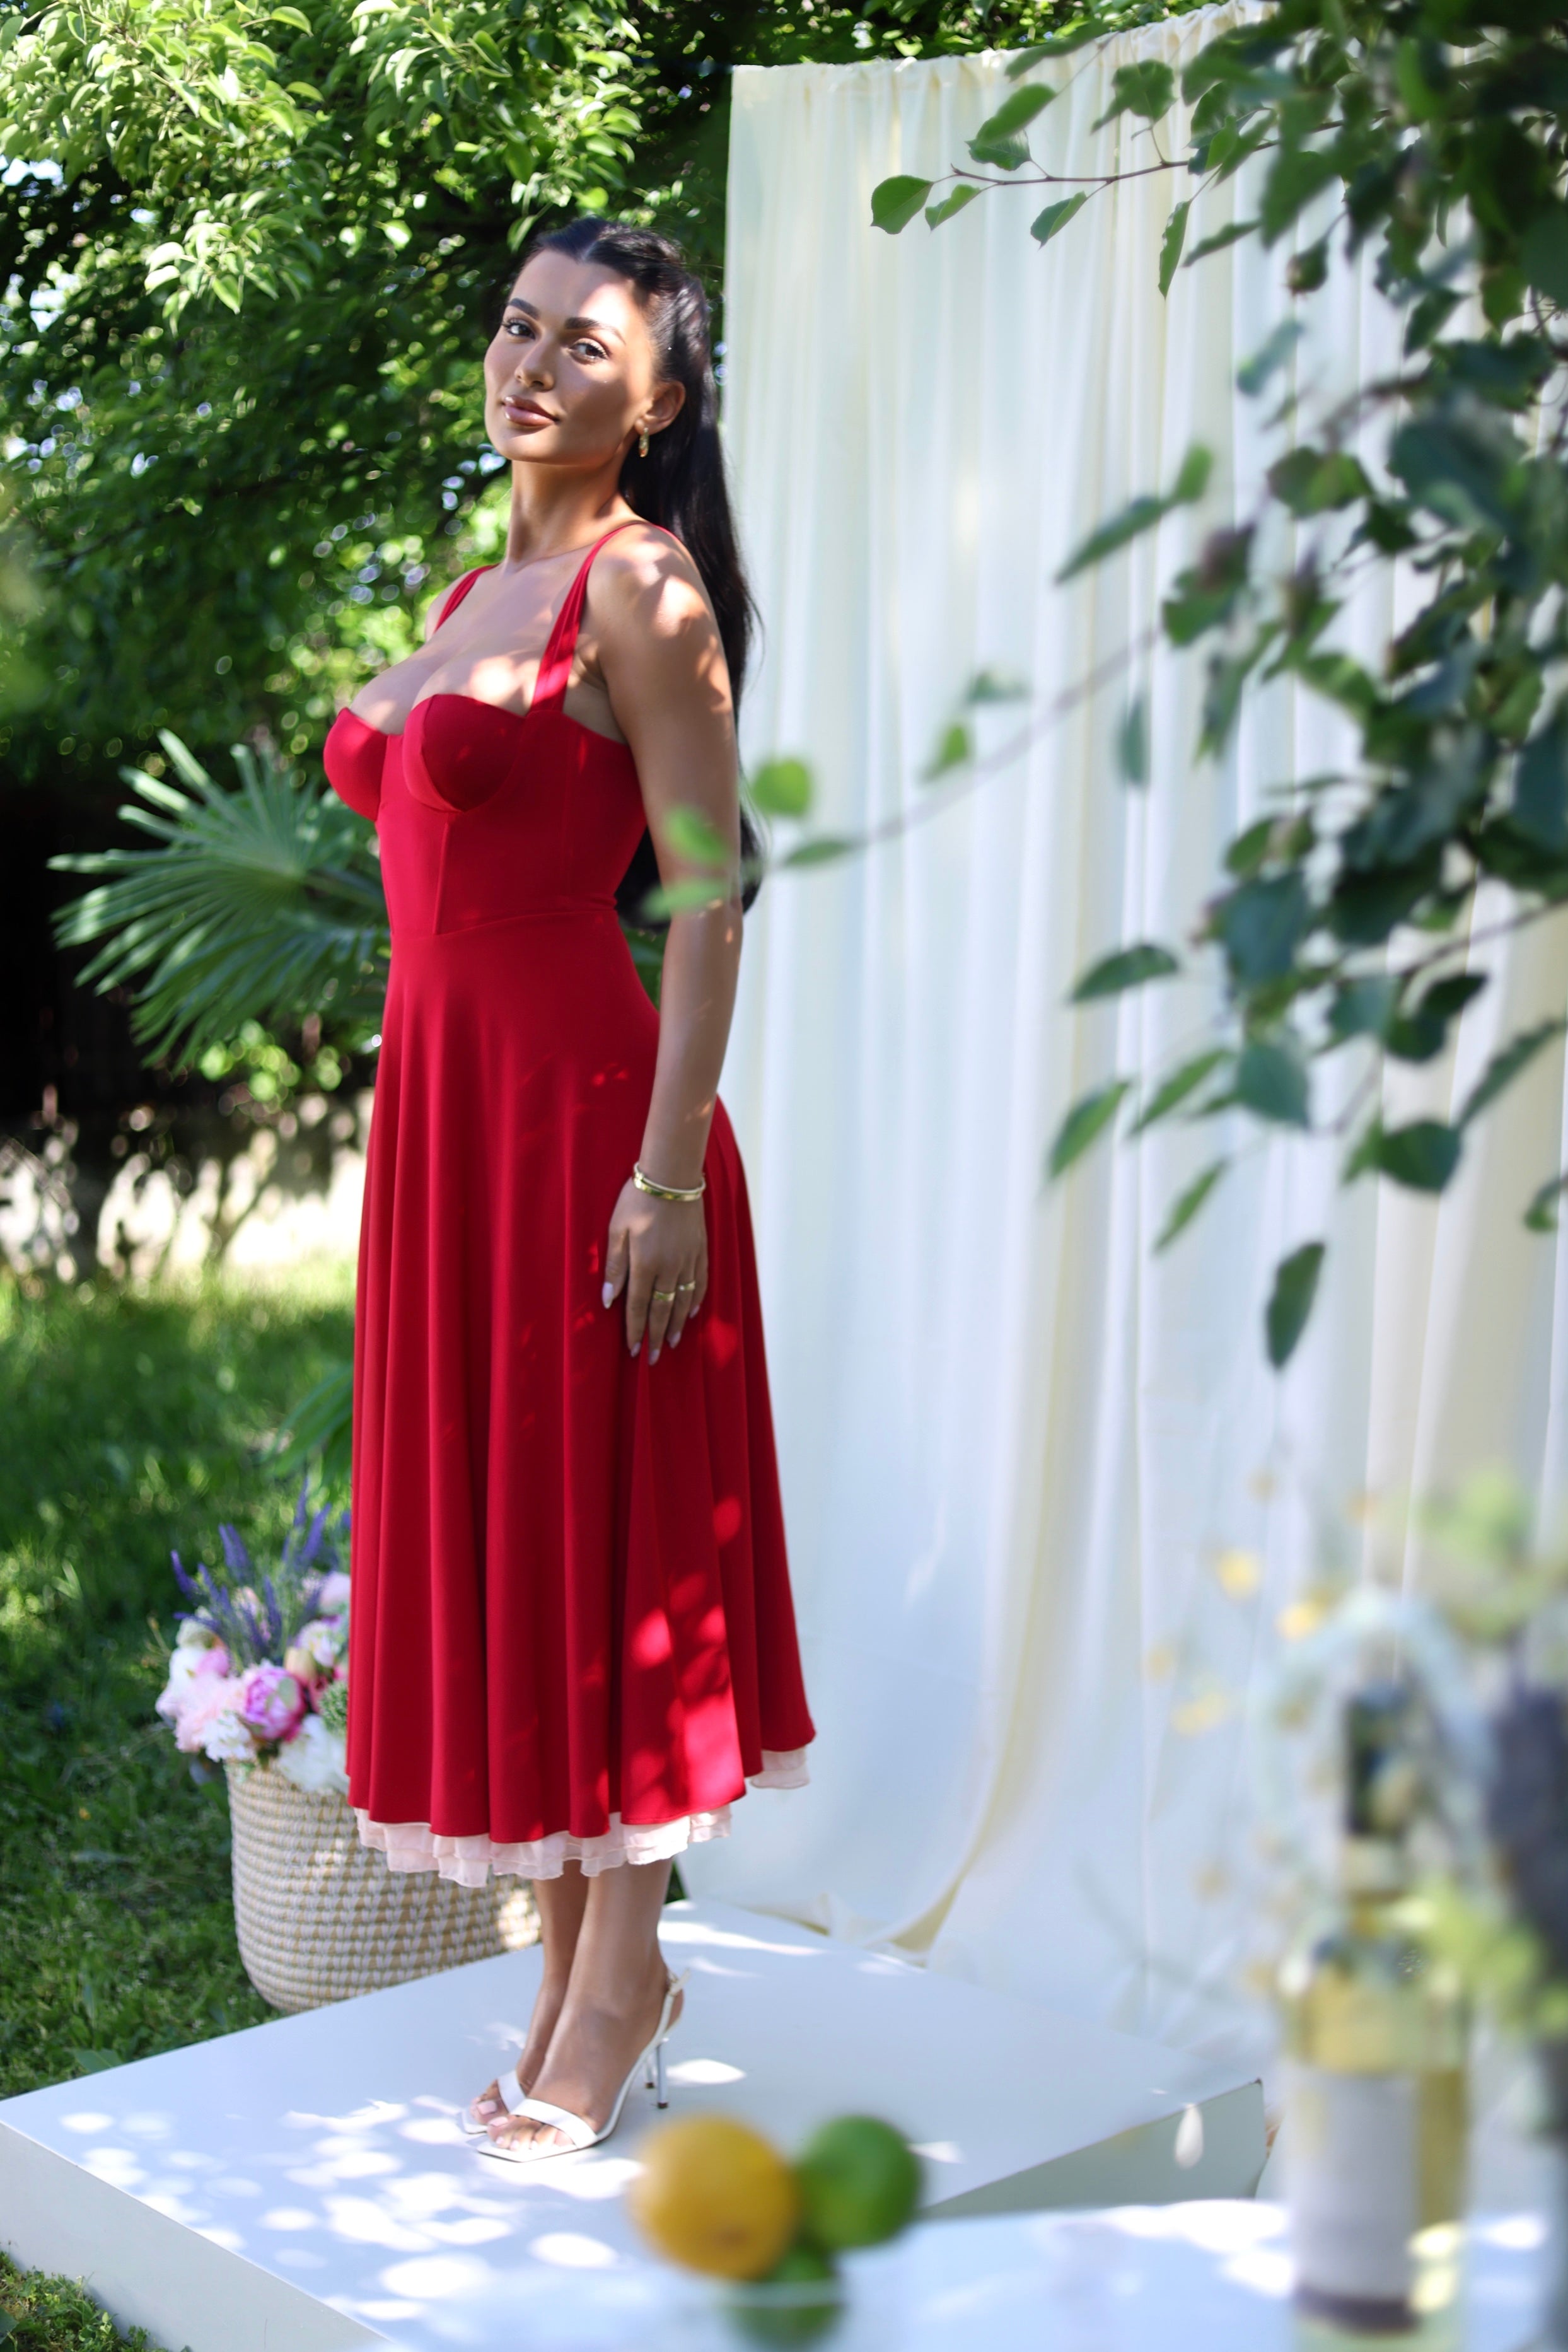 Sophie Red Dress